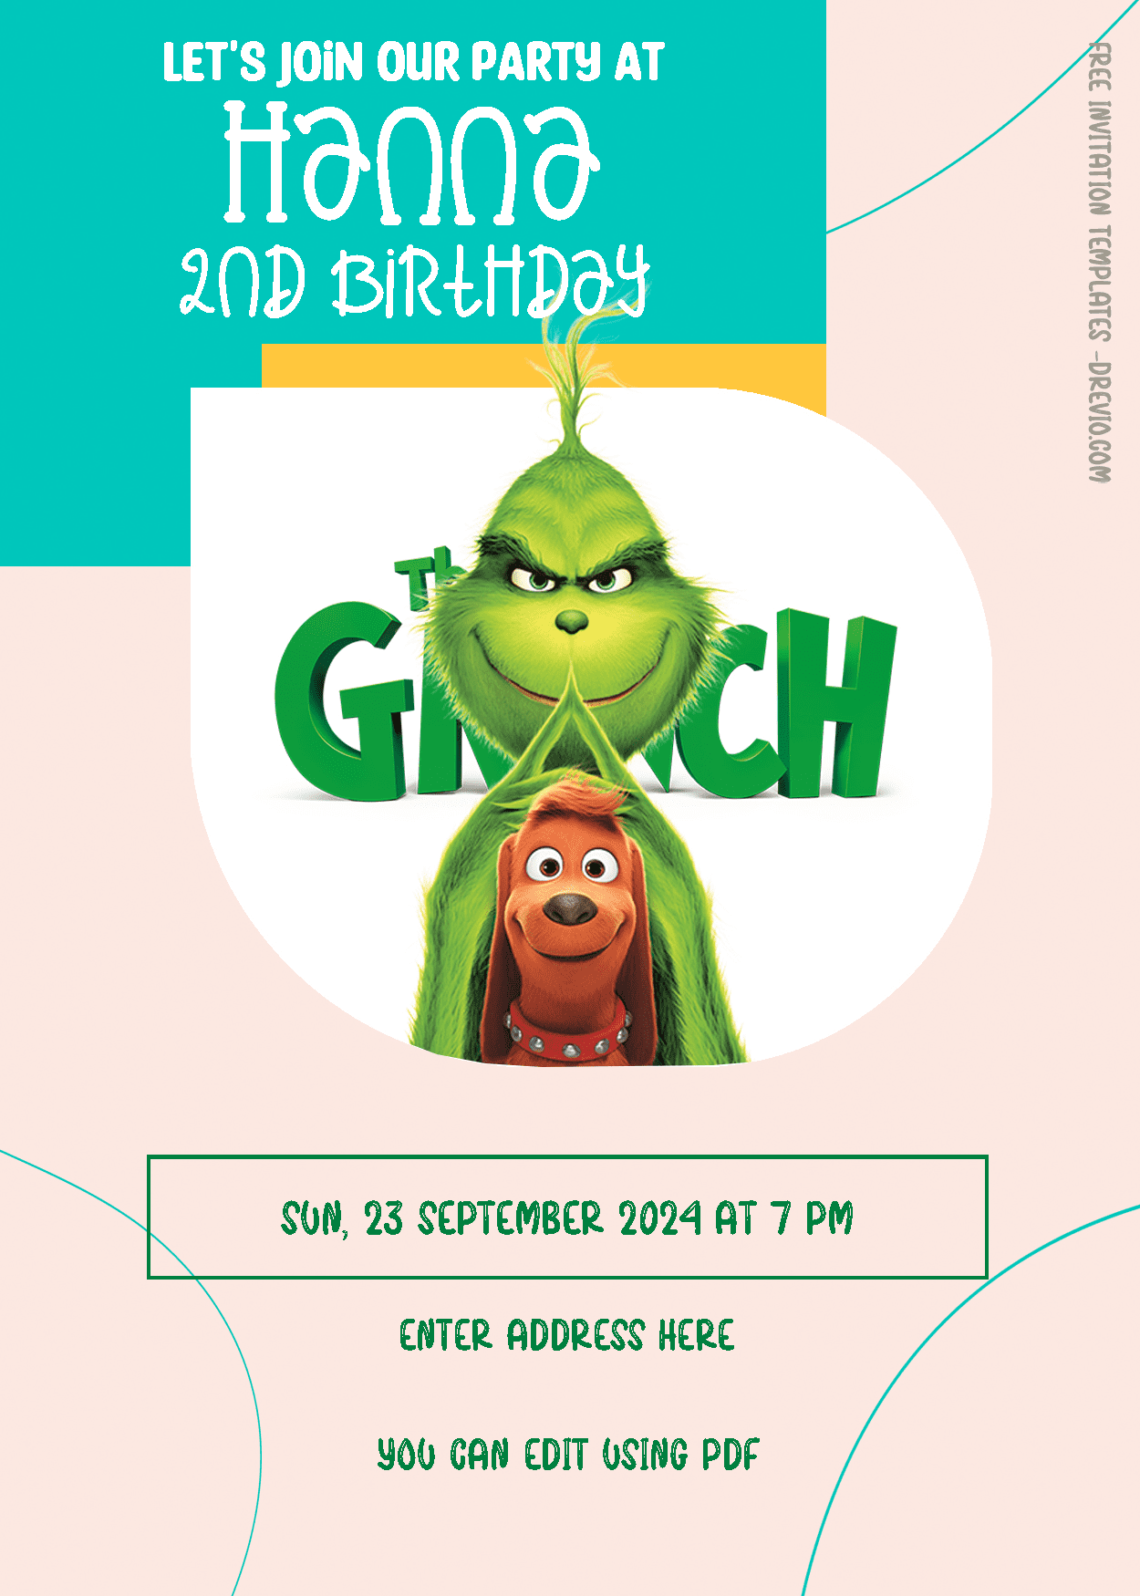 ( Free Editable PDF ) The Grinch Birthday Invitation Templates Two